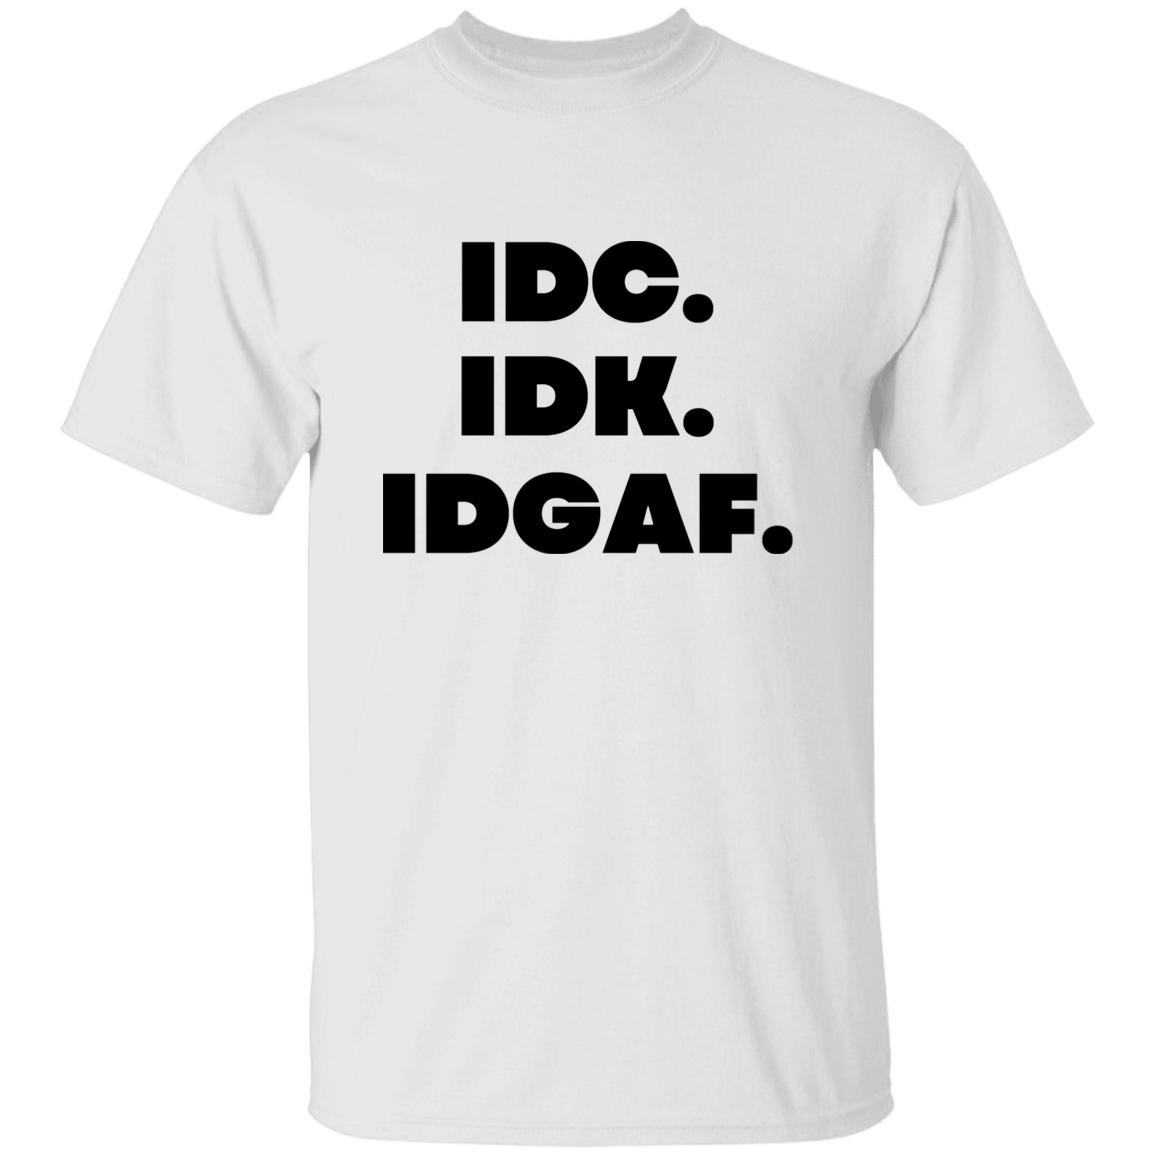 IDK IDC IDGAF T-Shirt, No Problem Shirt, Funny Quote Shirts, Feminist Shirt, Bitch T-Shirt, Novelty T-shirt, Sarcastic T-shirt